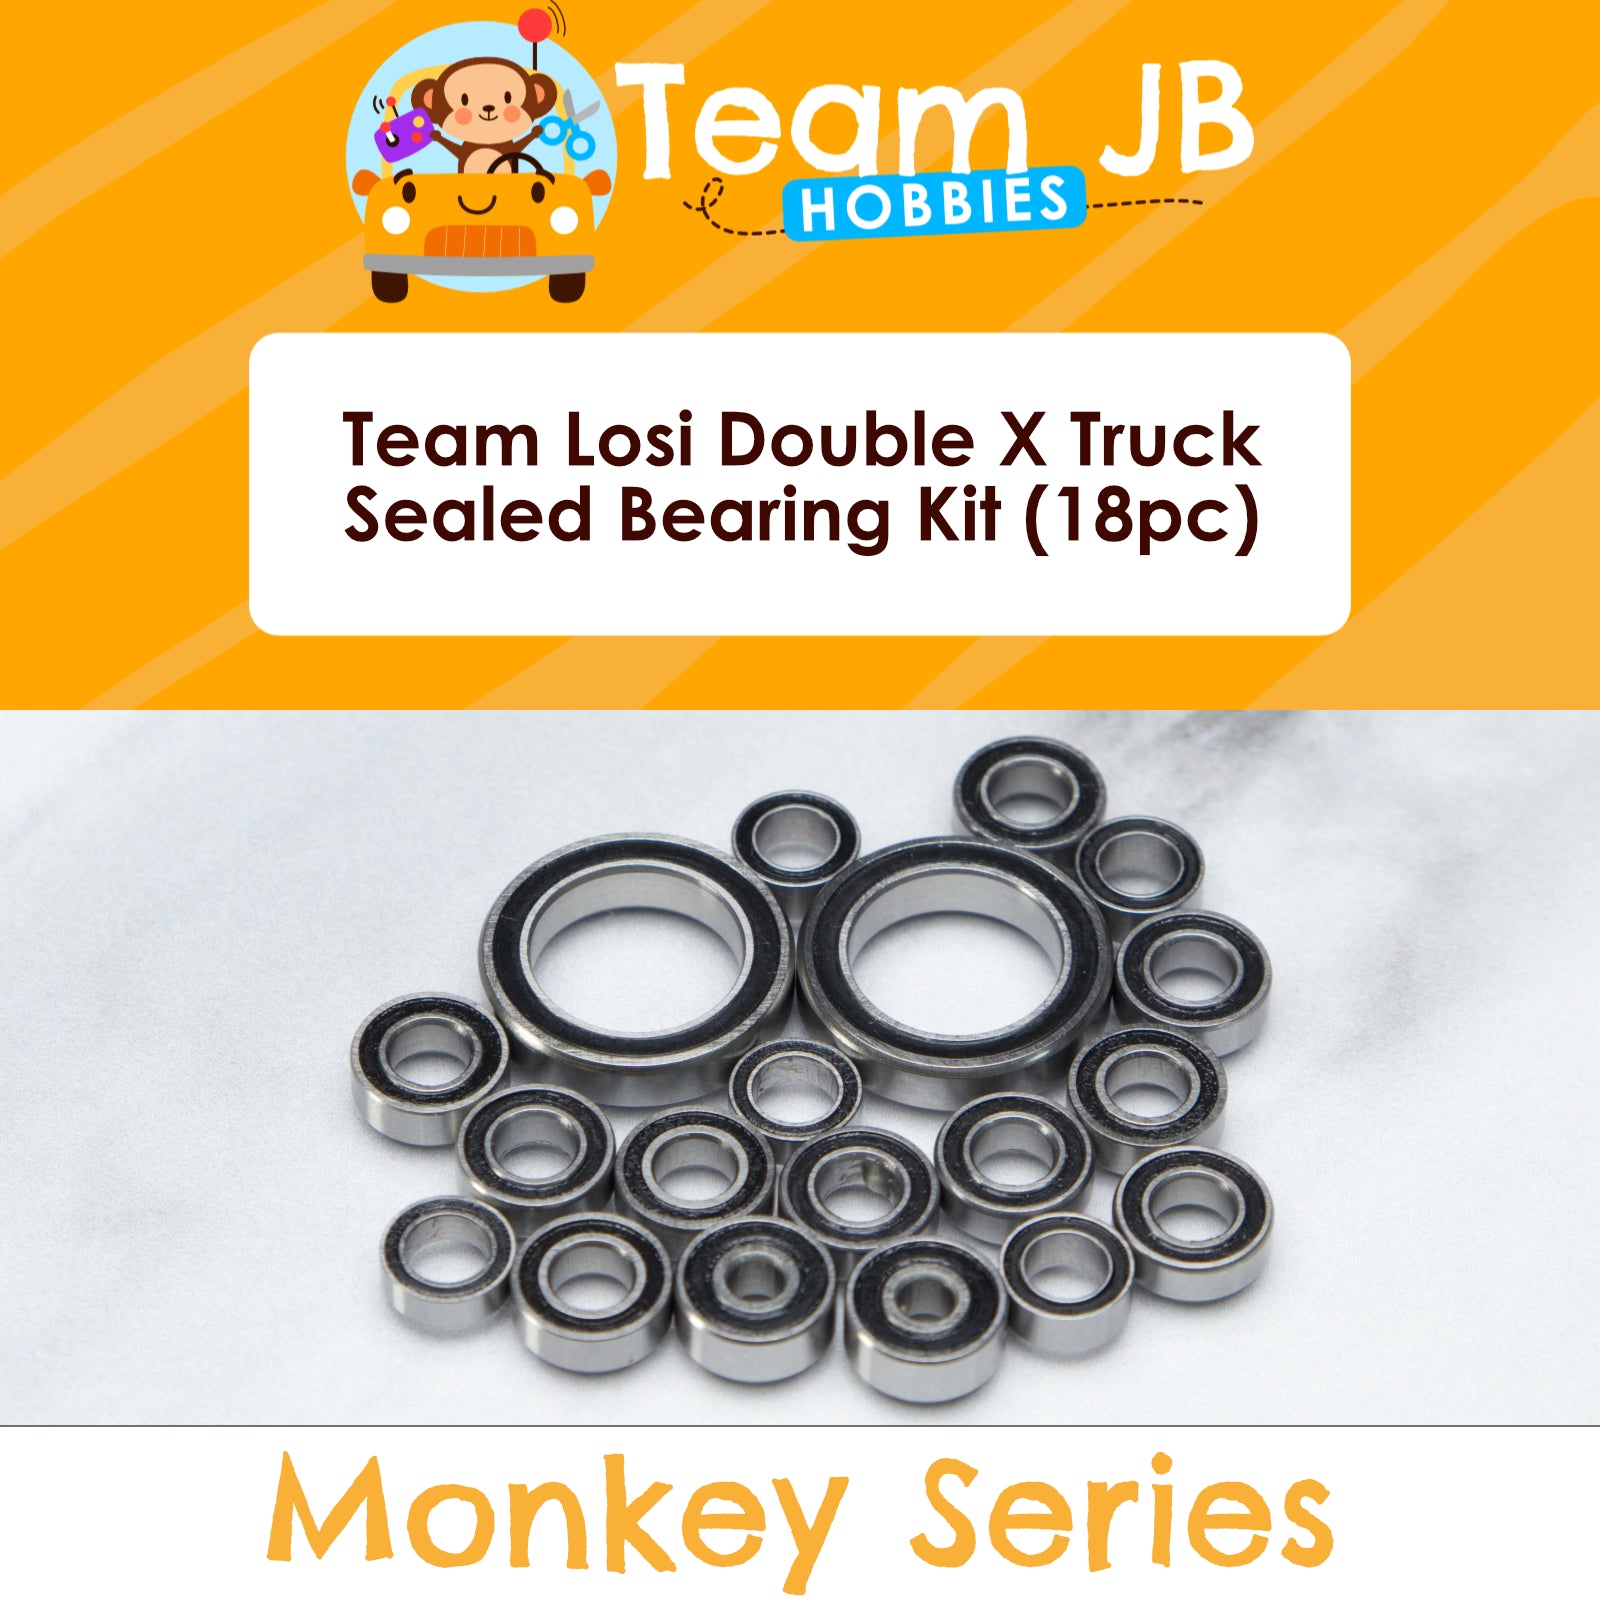 Team Losi Double X Truck - Sealed Bearing Kit